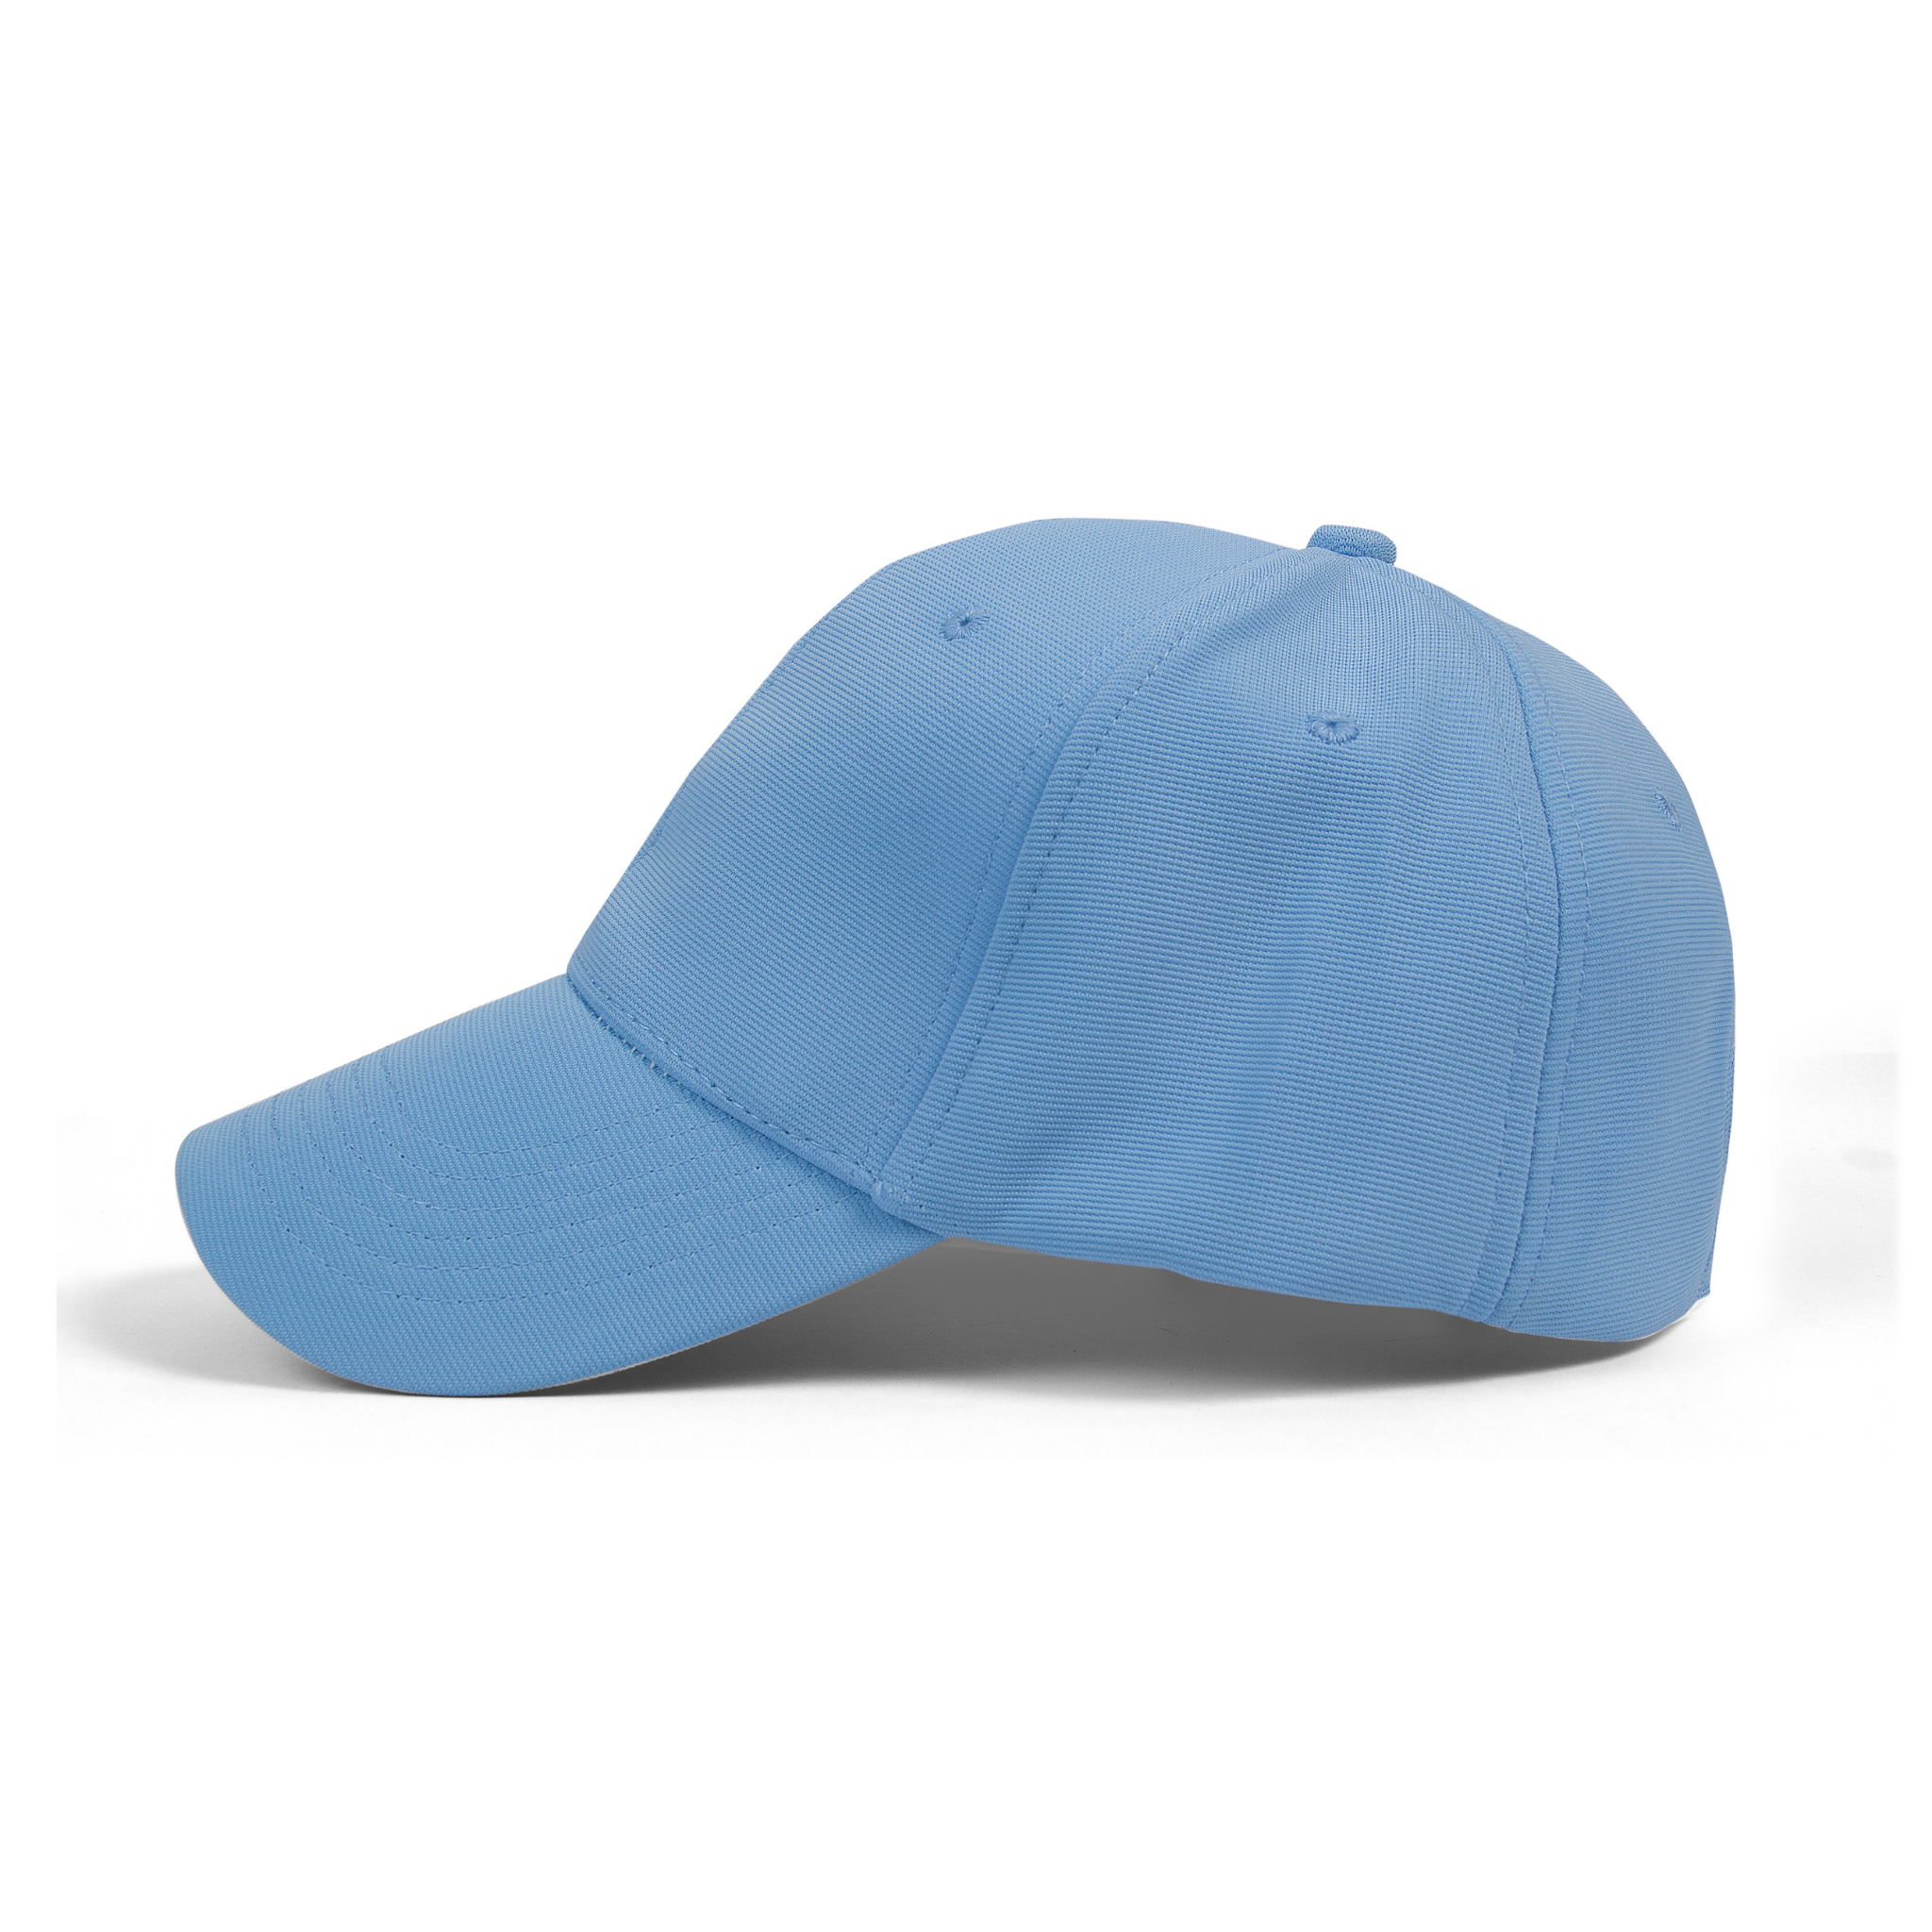 Plain Structured Baseball Cap, Classic Dad Hat Fits Men Women, Blank  Adjustable Size Low Profile Snapback Hats